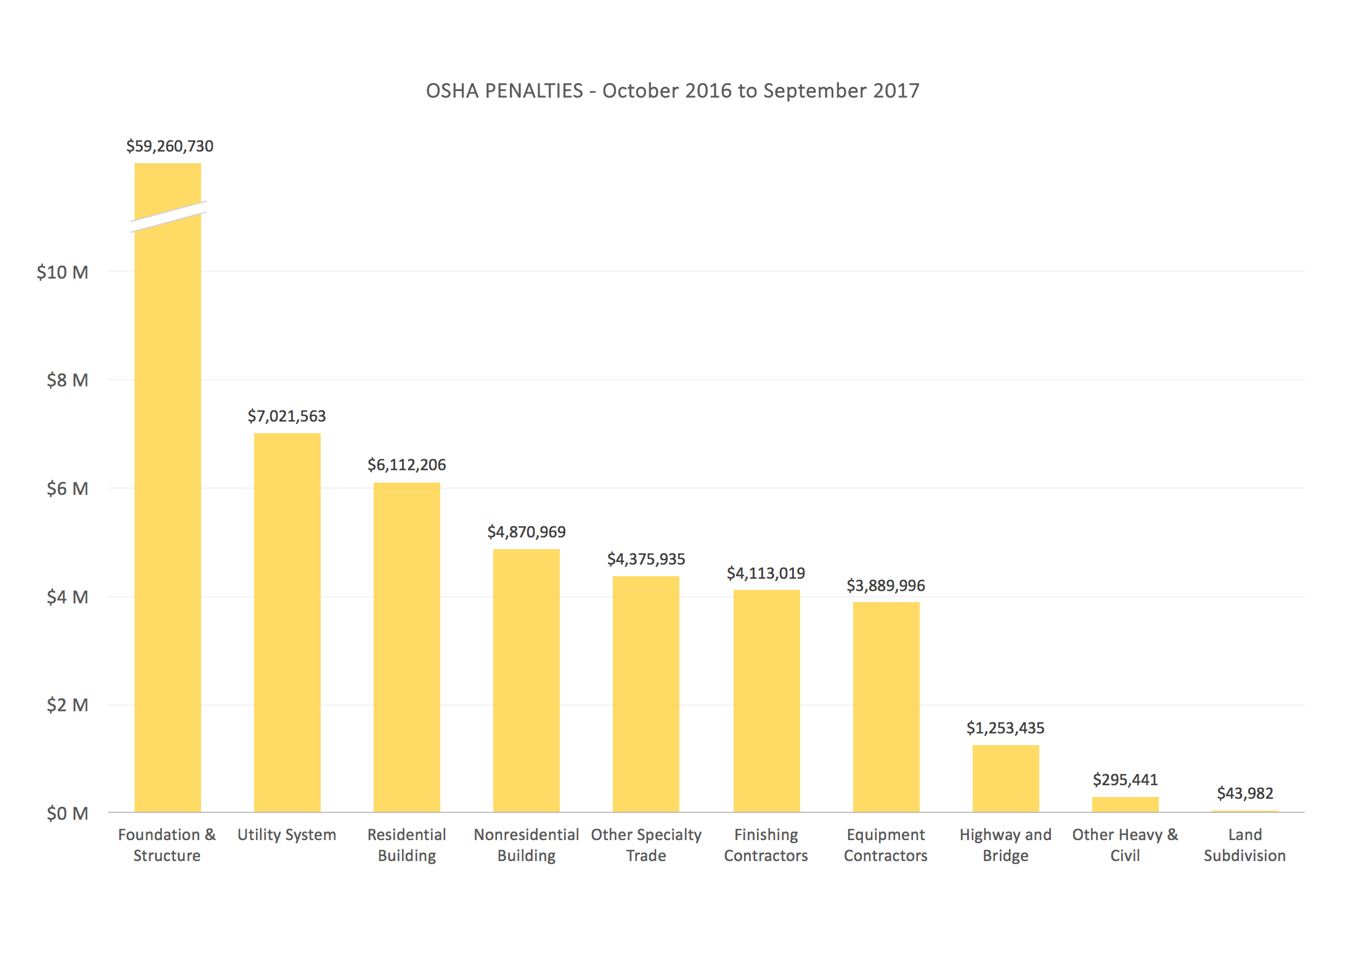 Bar graph displaying OSHA penalties from October 2016 - September 2017